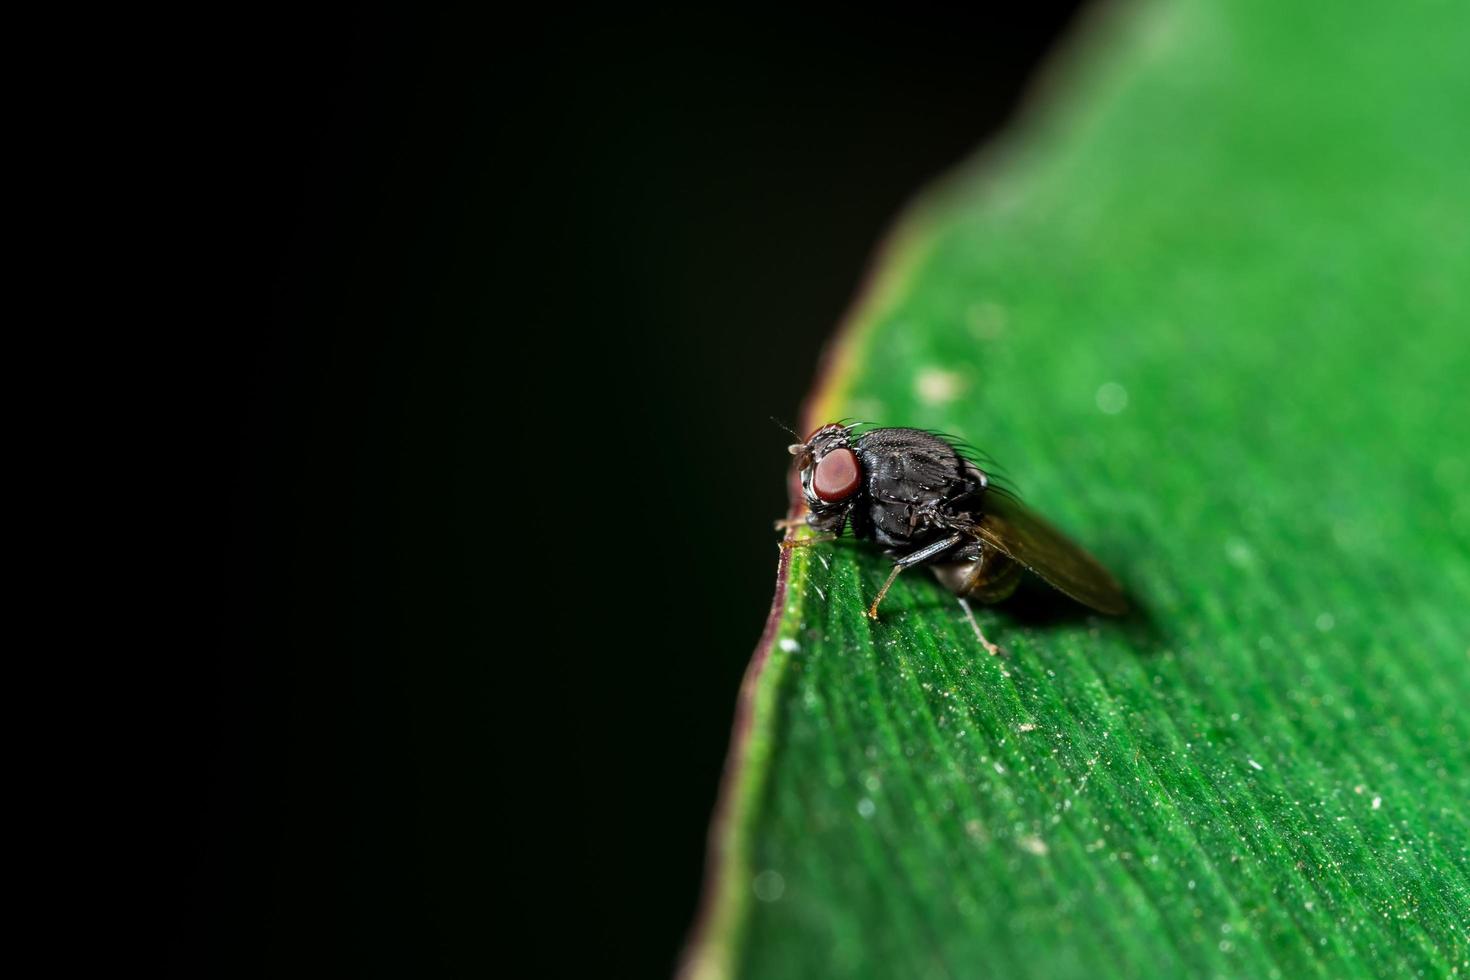 Drosophila fly on a leaf photo